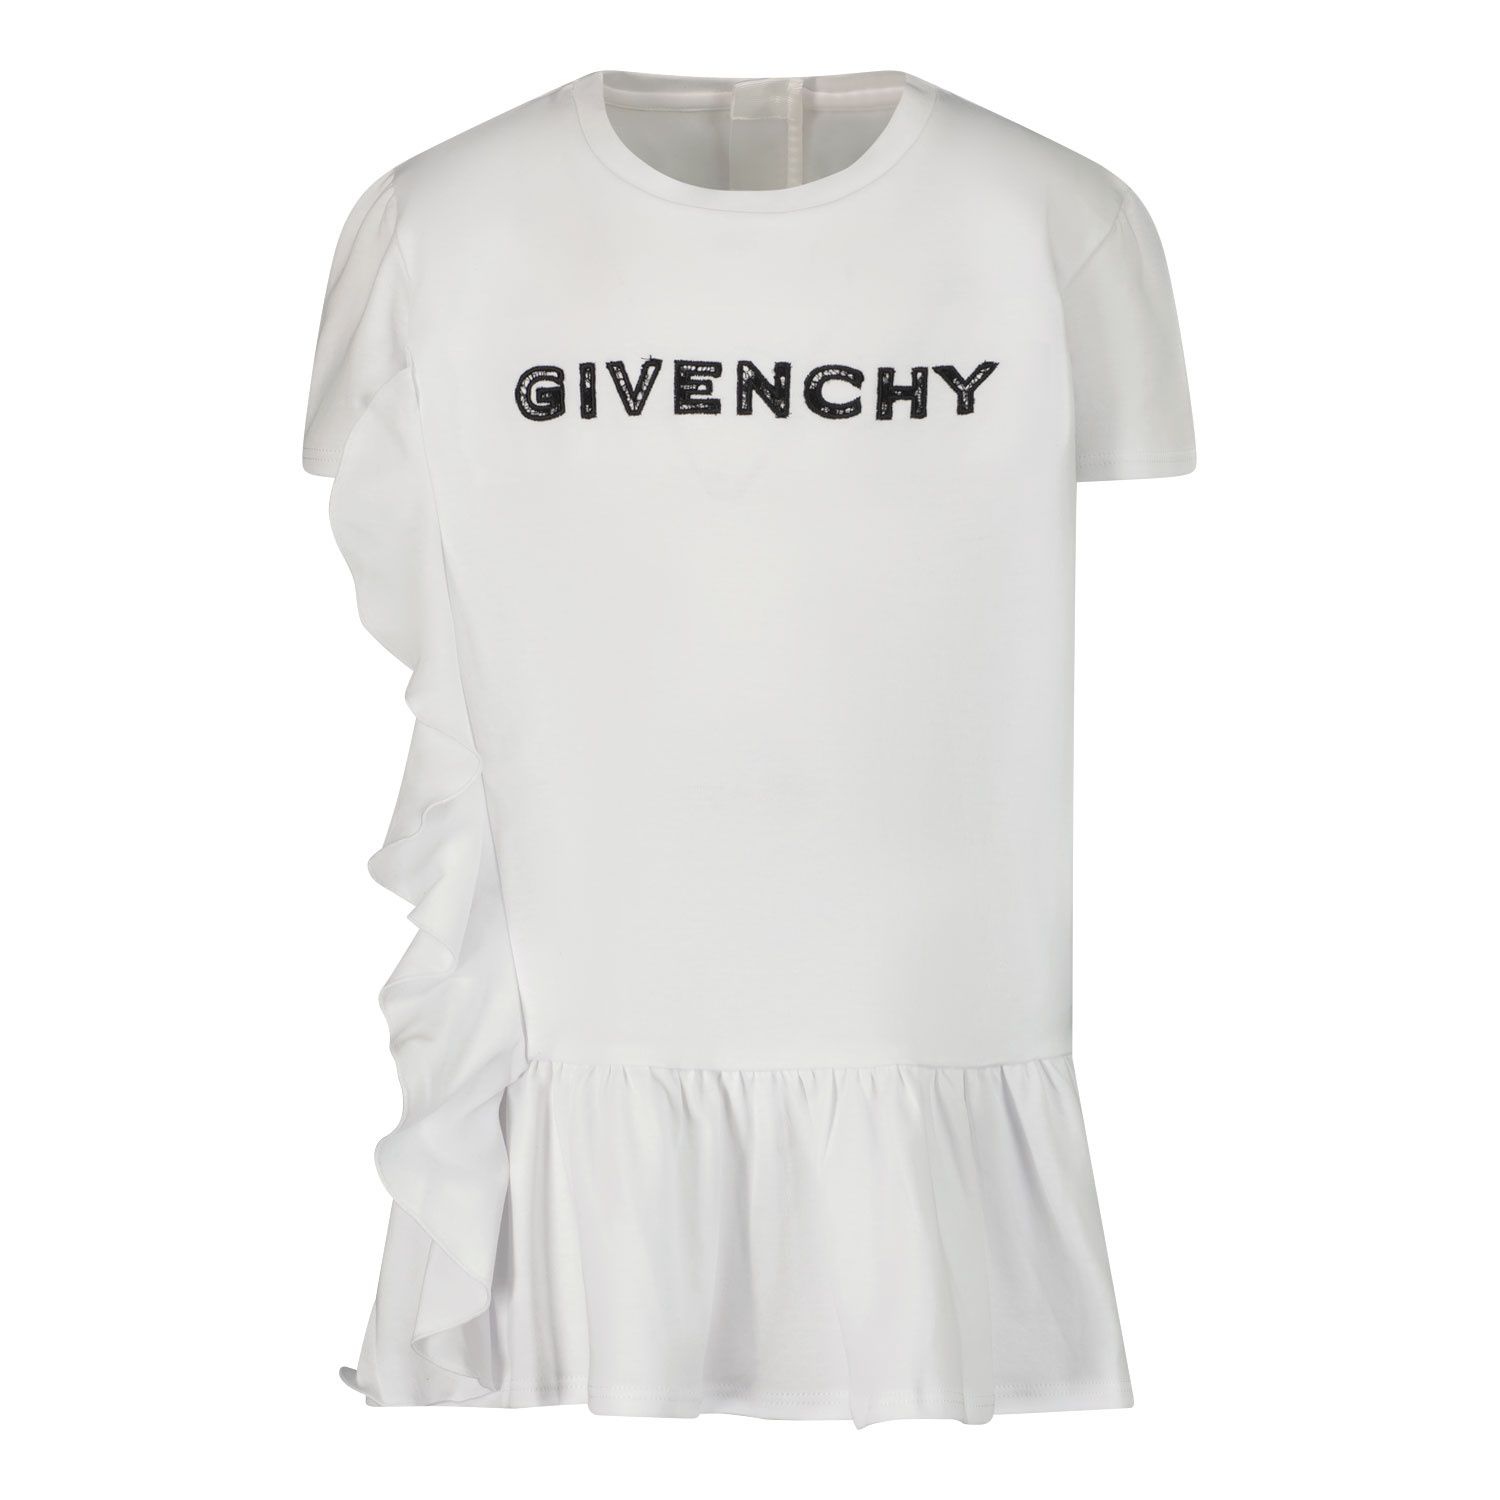 Afbeelding van Givenchy H02086 babyjurkje wit